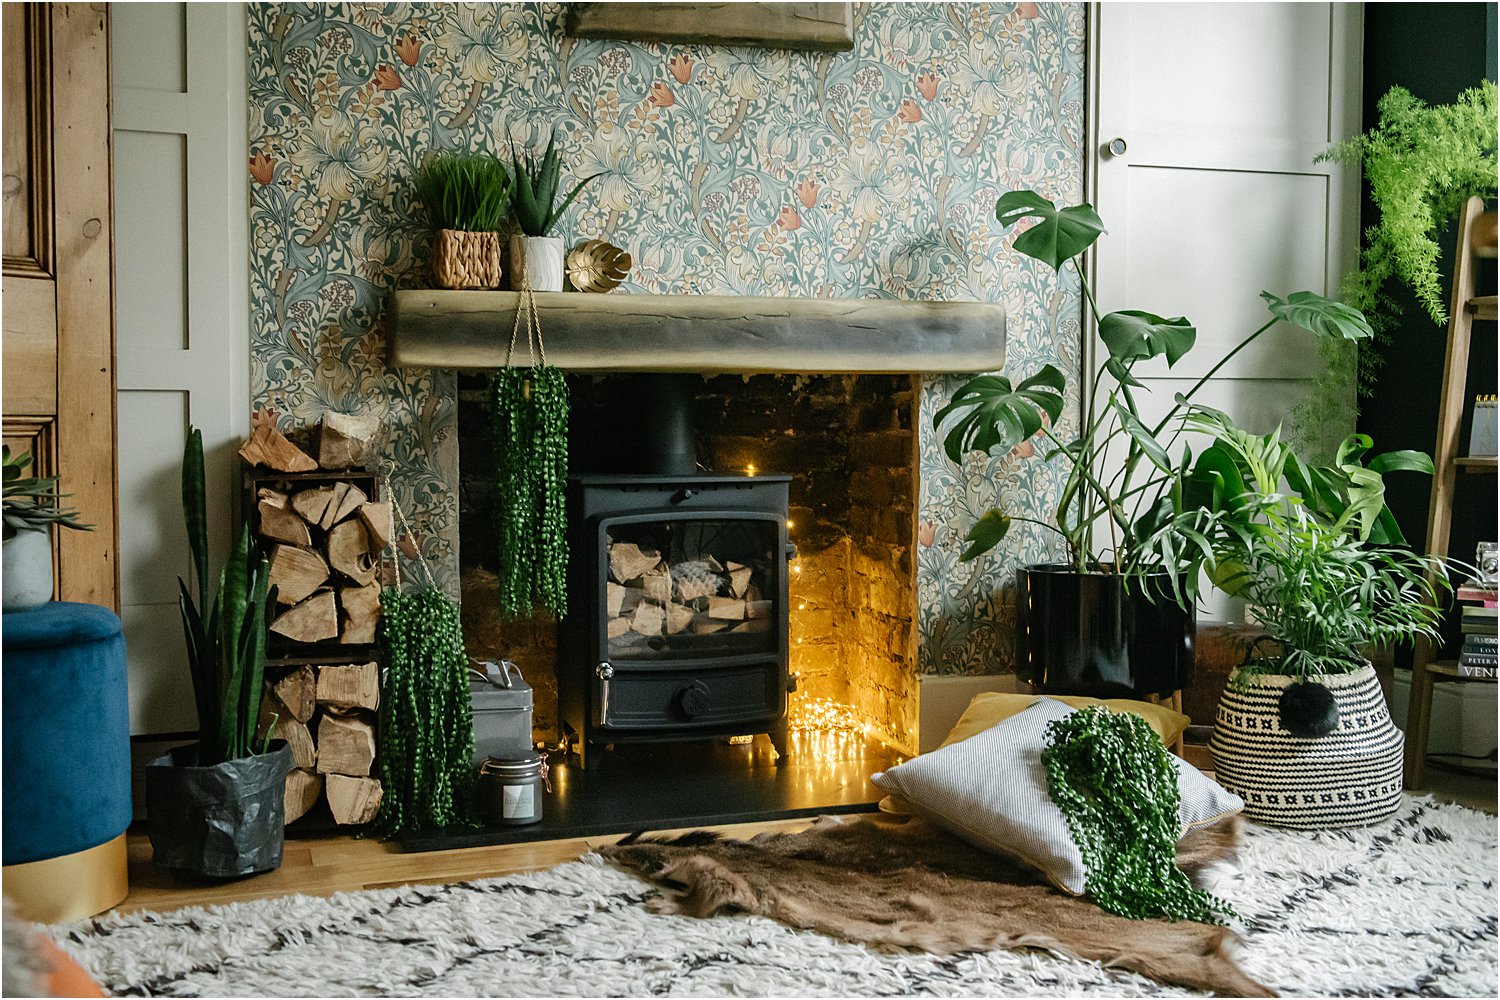 inexpensive-ways-ideas-making-home-cosy-dark-interiors-lily-sawyer-photo